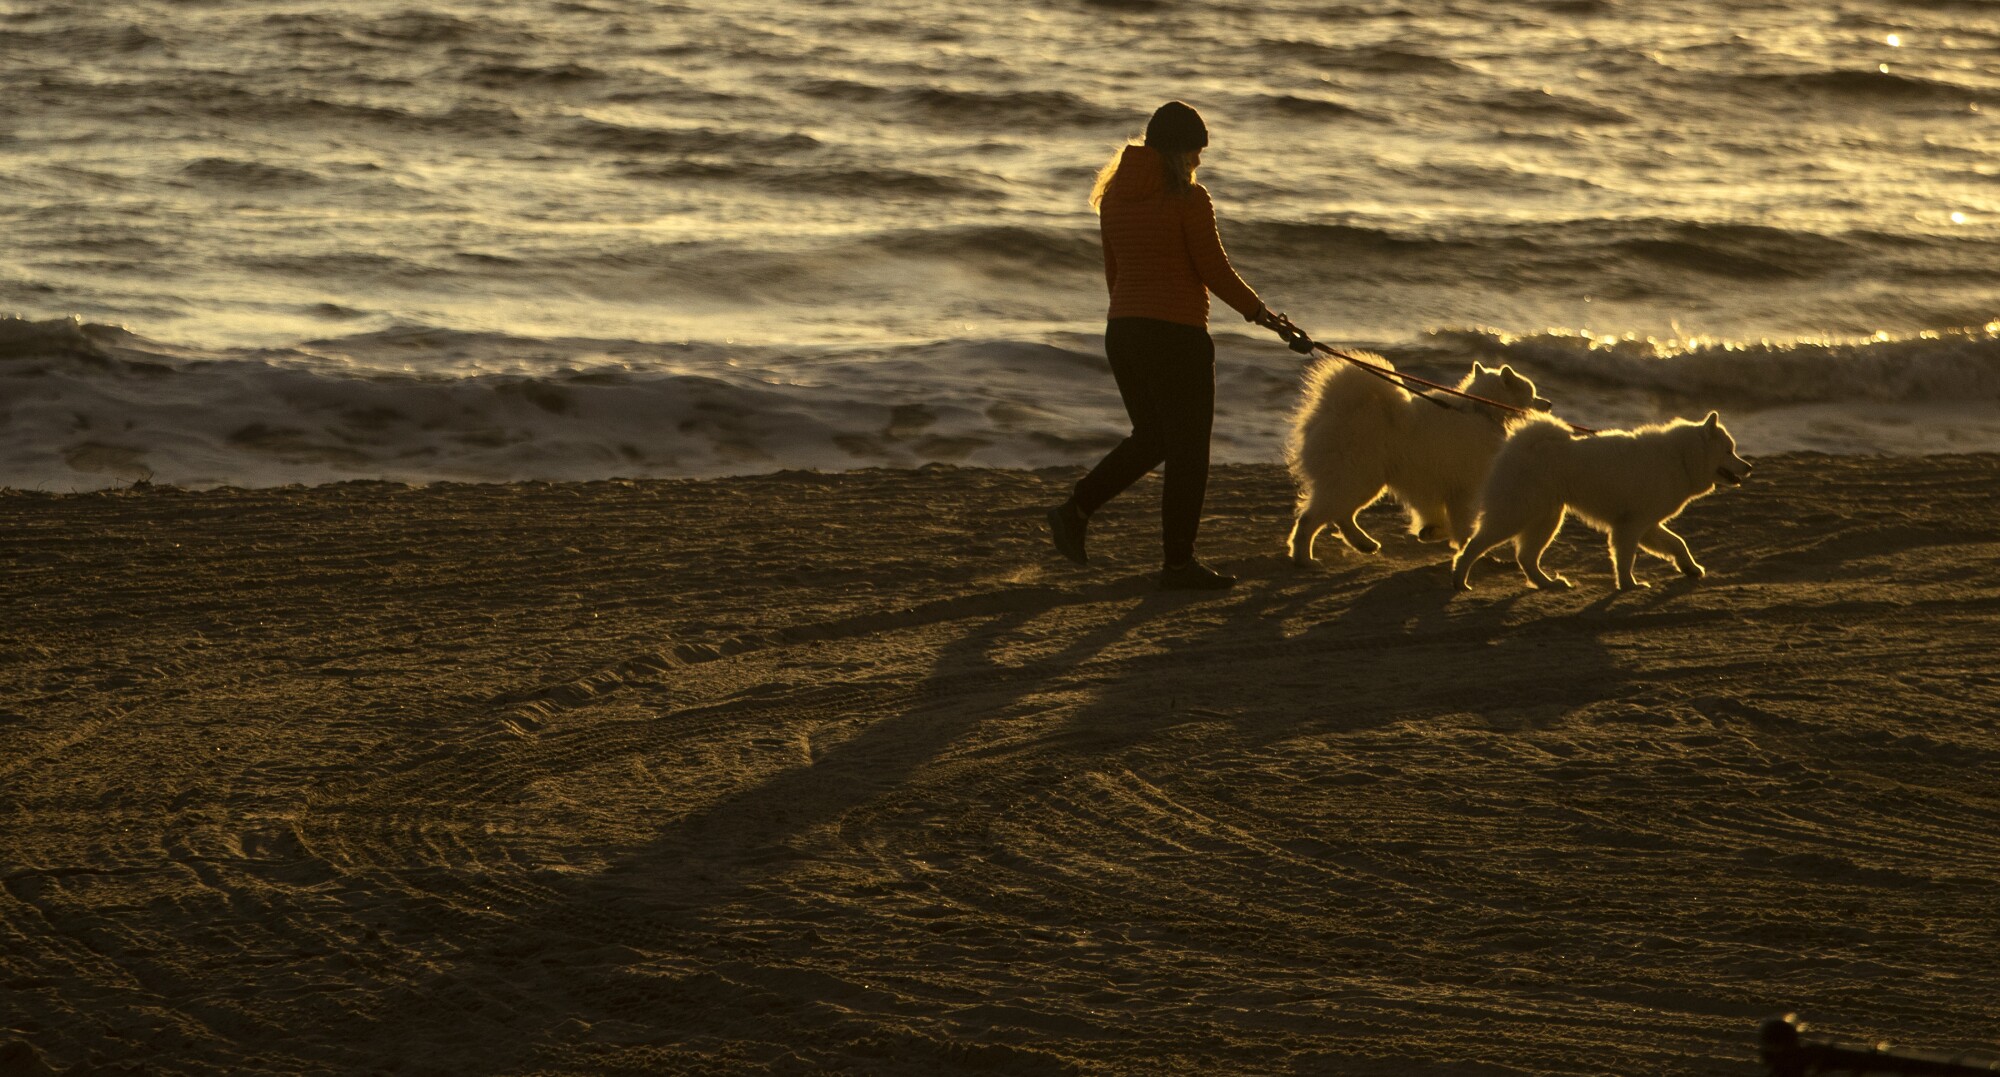 Karyn Williams from Santa Monica walks her two dogs on the beach.